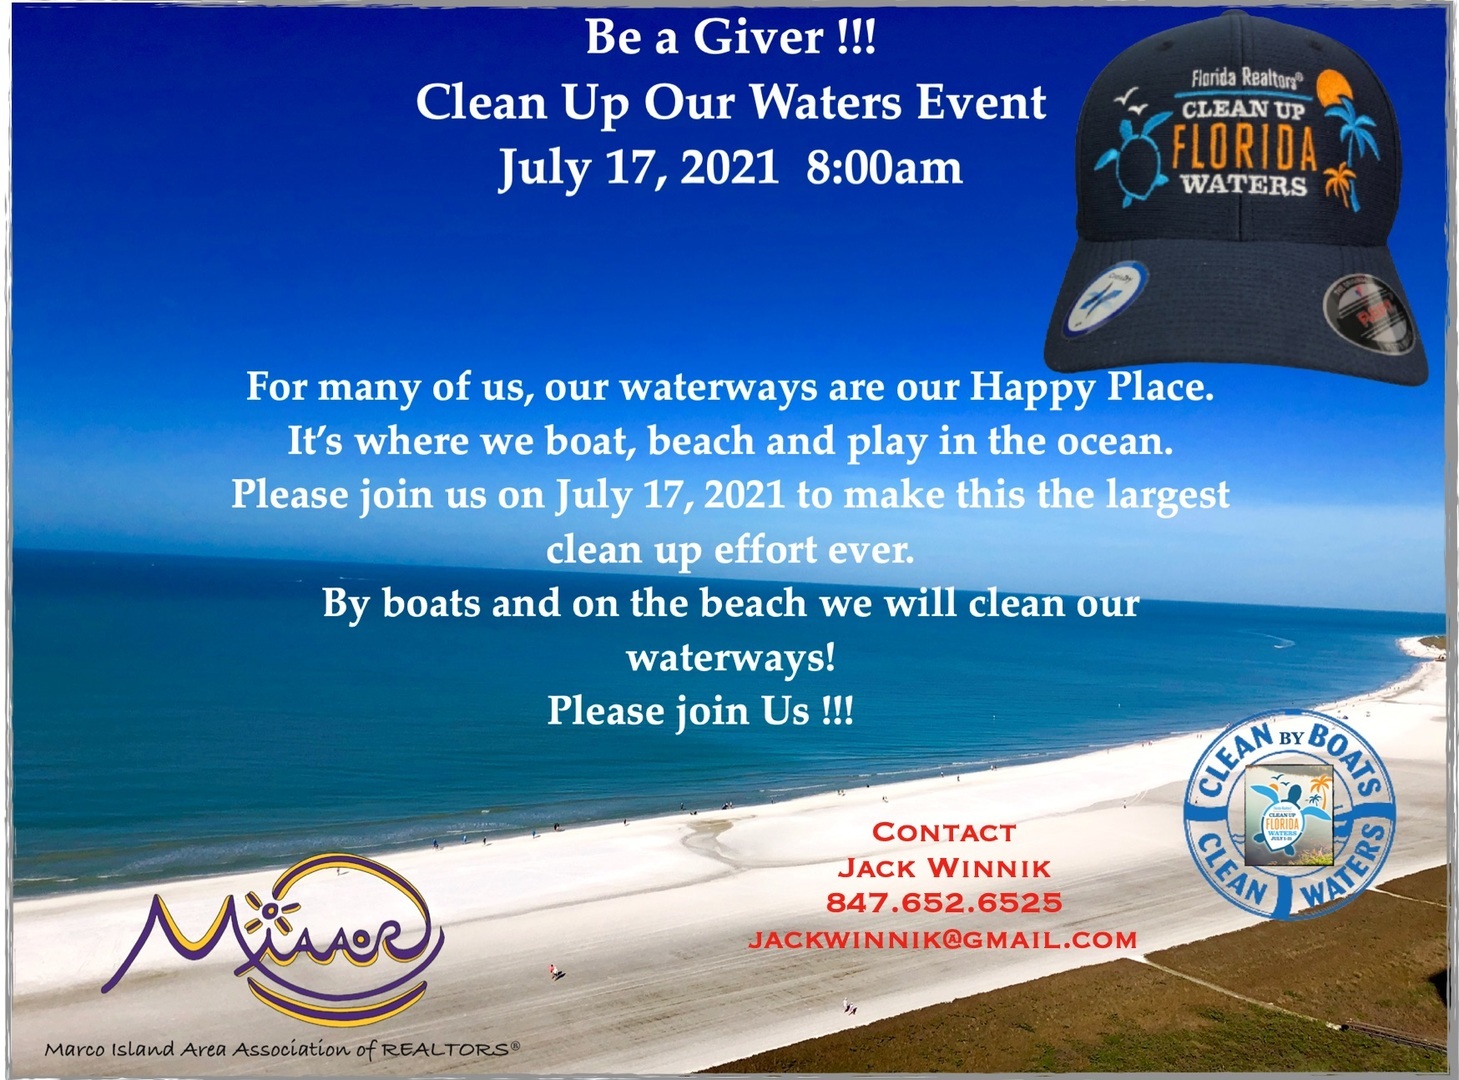 Florida Realtors®' Clean Up Florida's Waters, Naples, Florida, United States